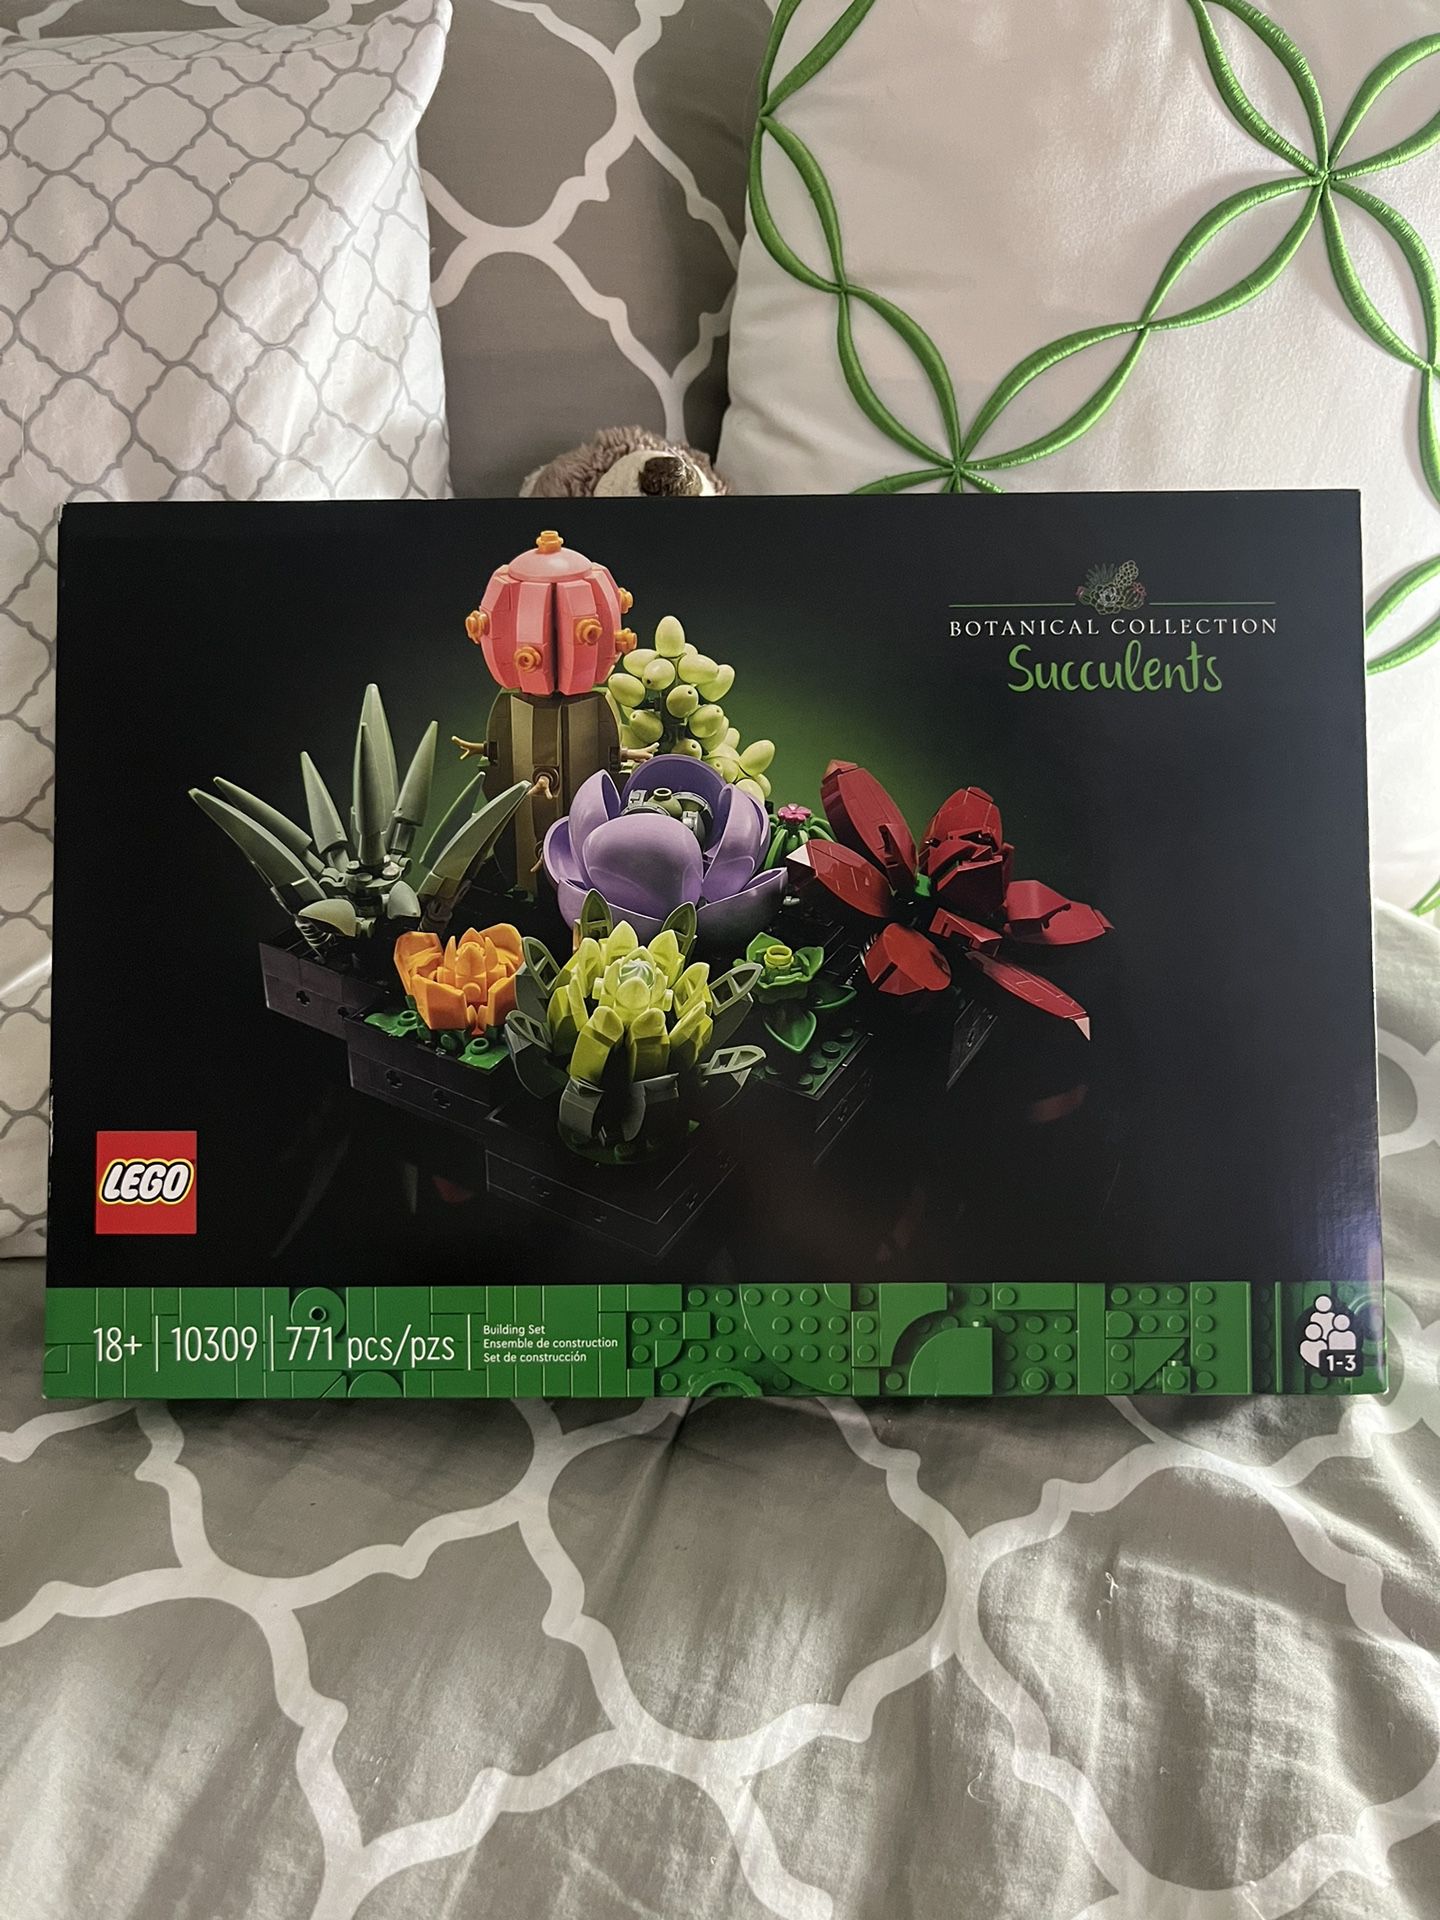 BOTANICAL COLLECTION Succulents Lego Set